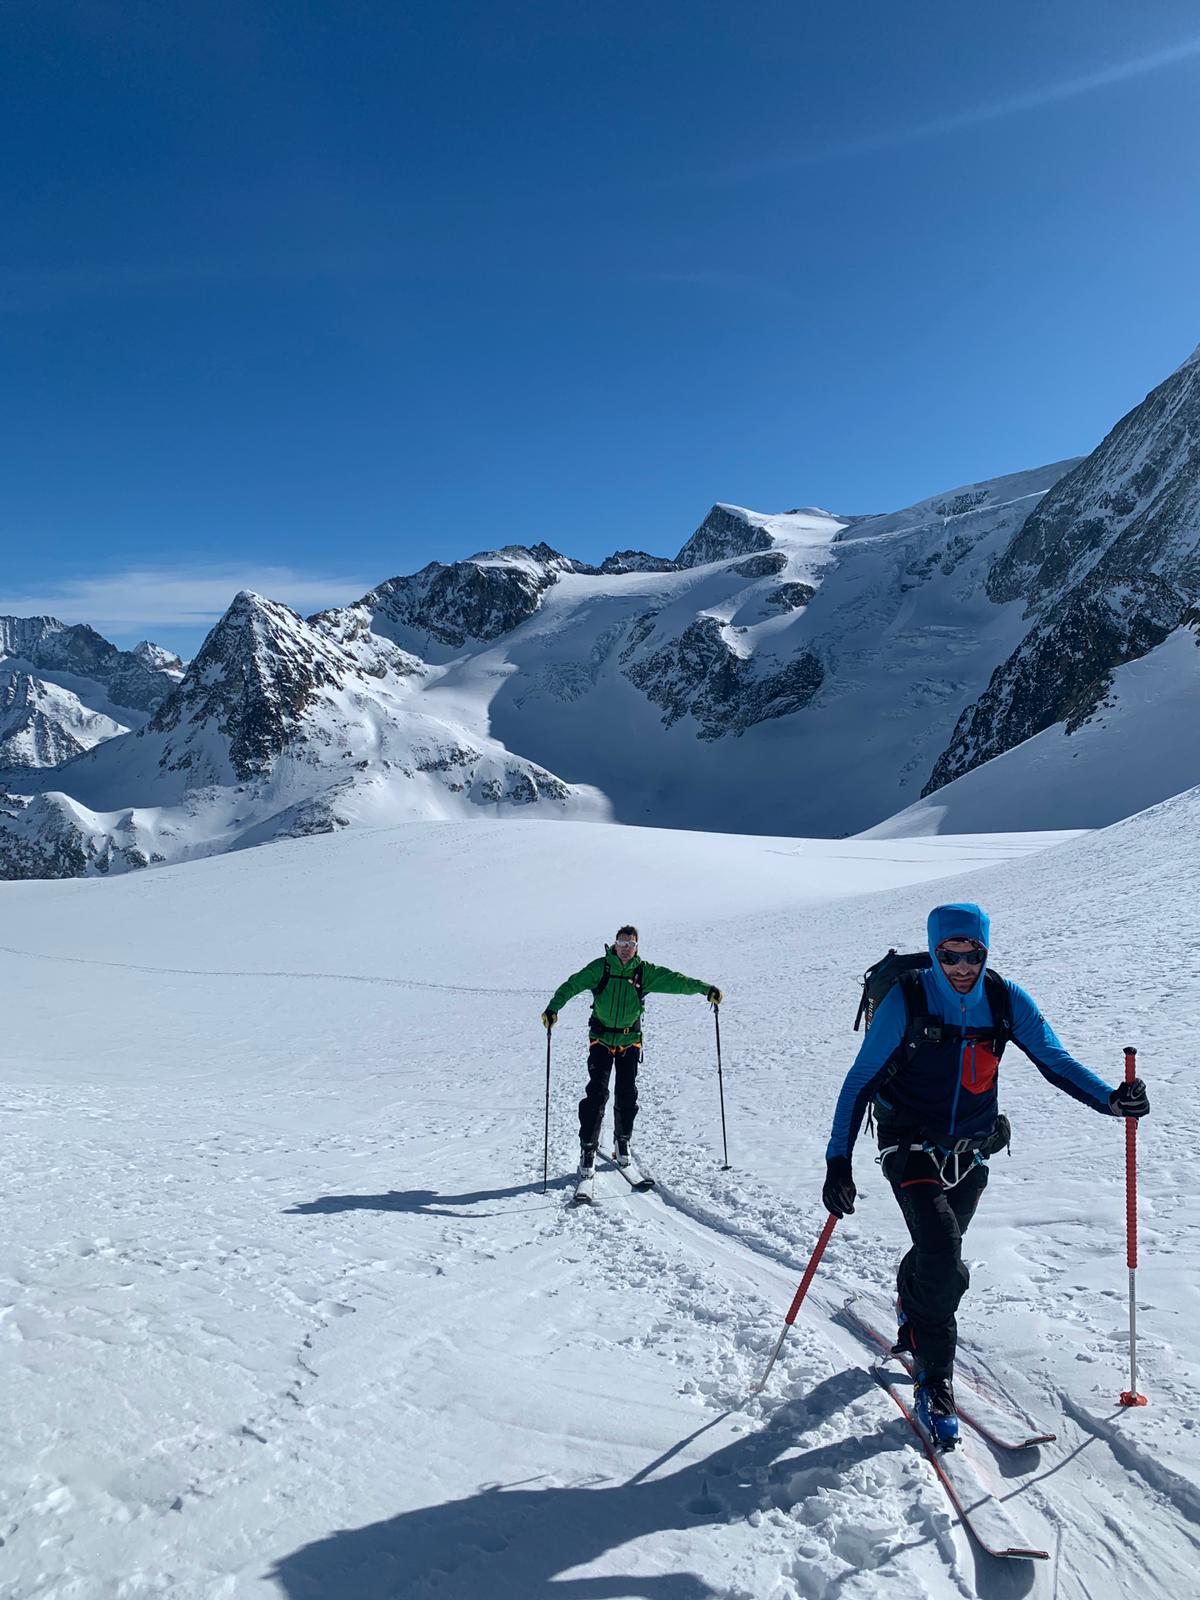 Test Blue Ice Choucas : Harnais - ski alpinisme